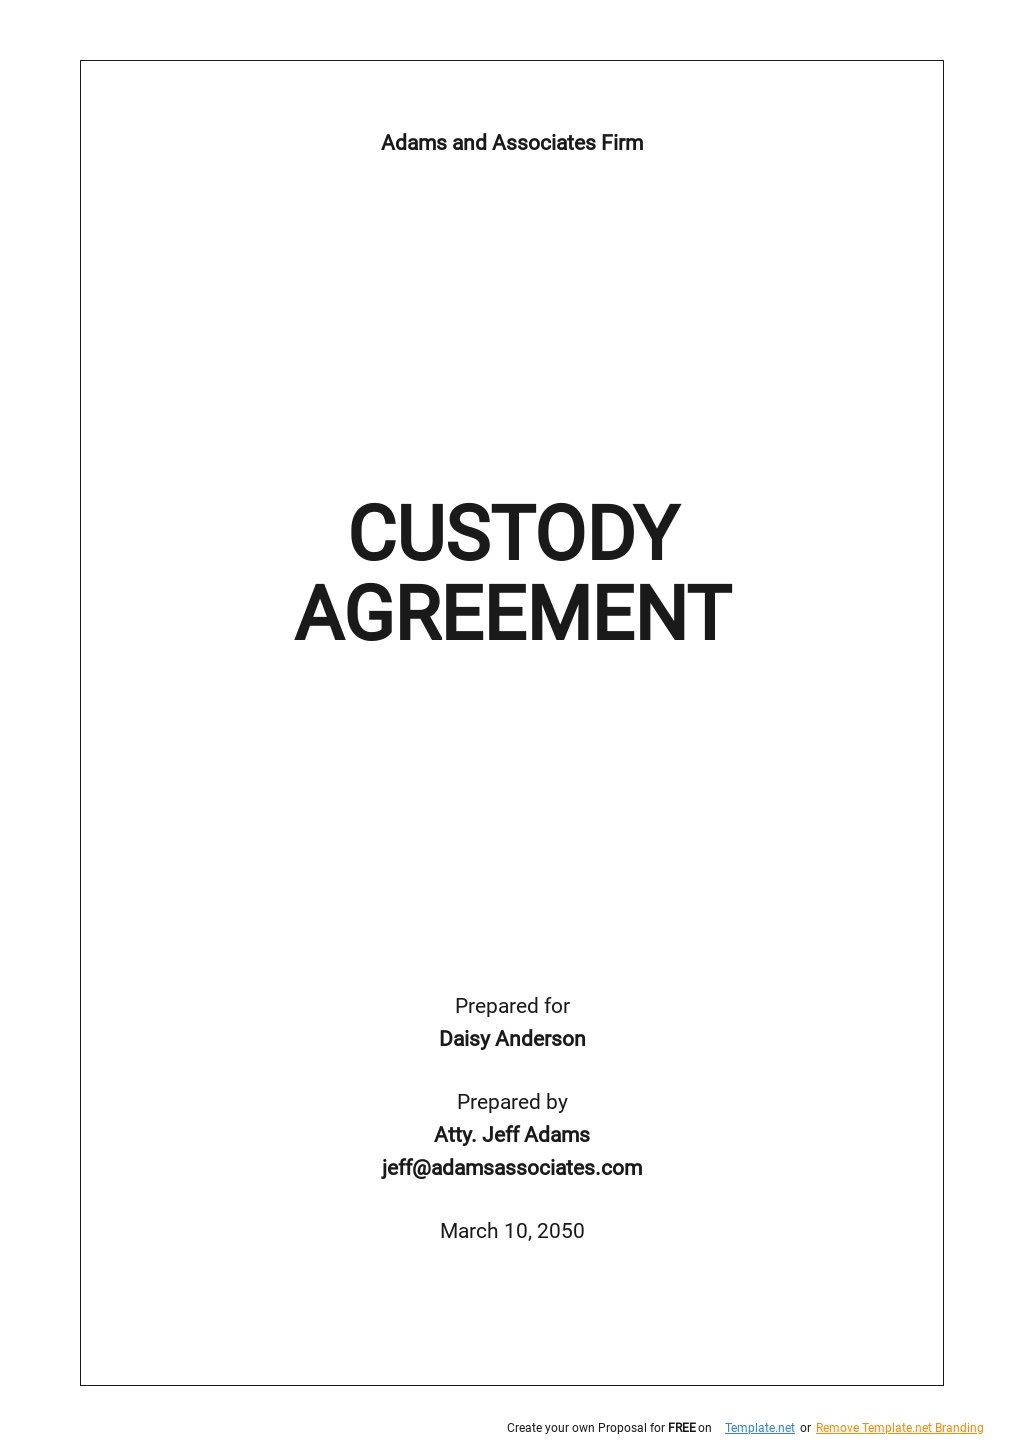 child-custody-agreement-templates-7-docs-free-downloads-template